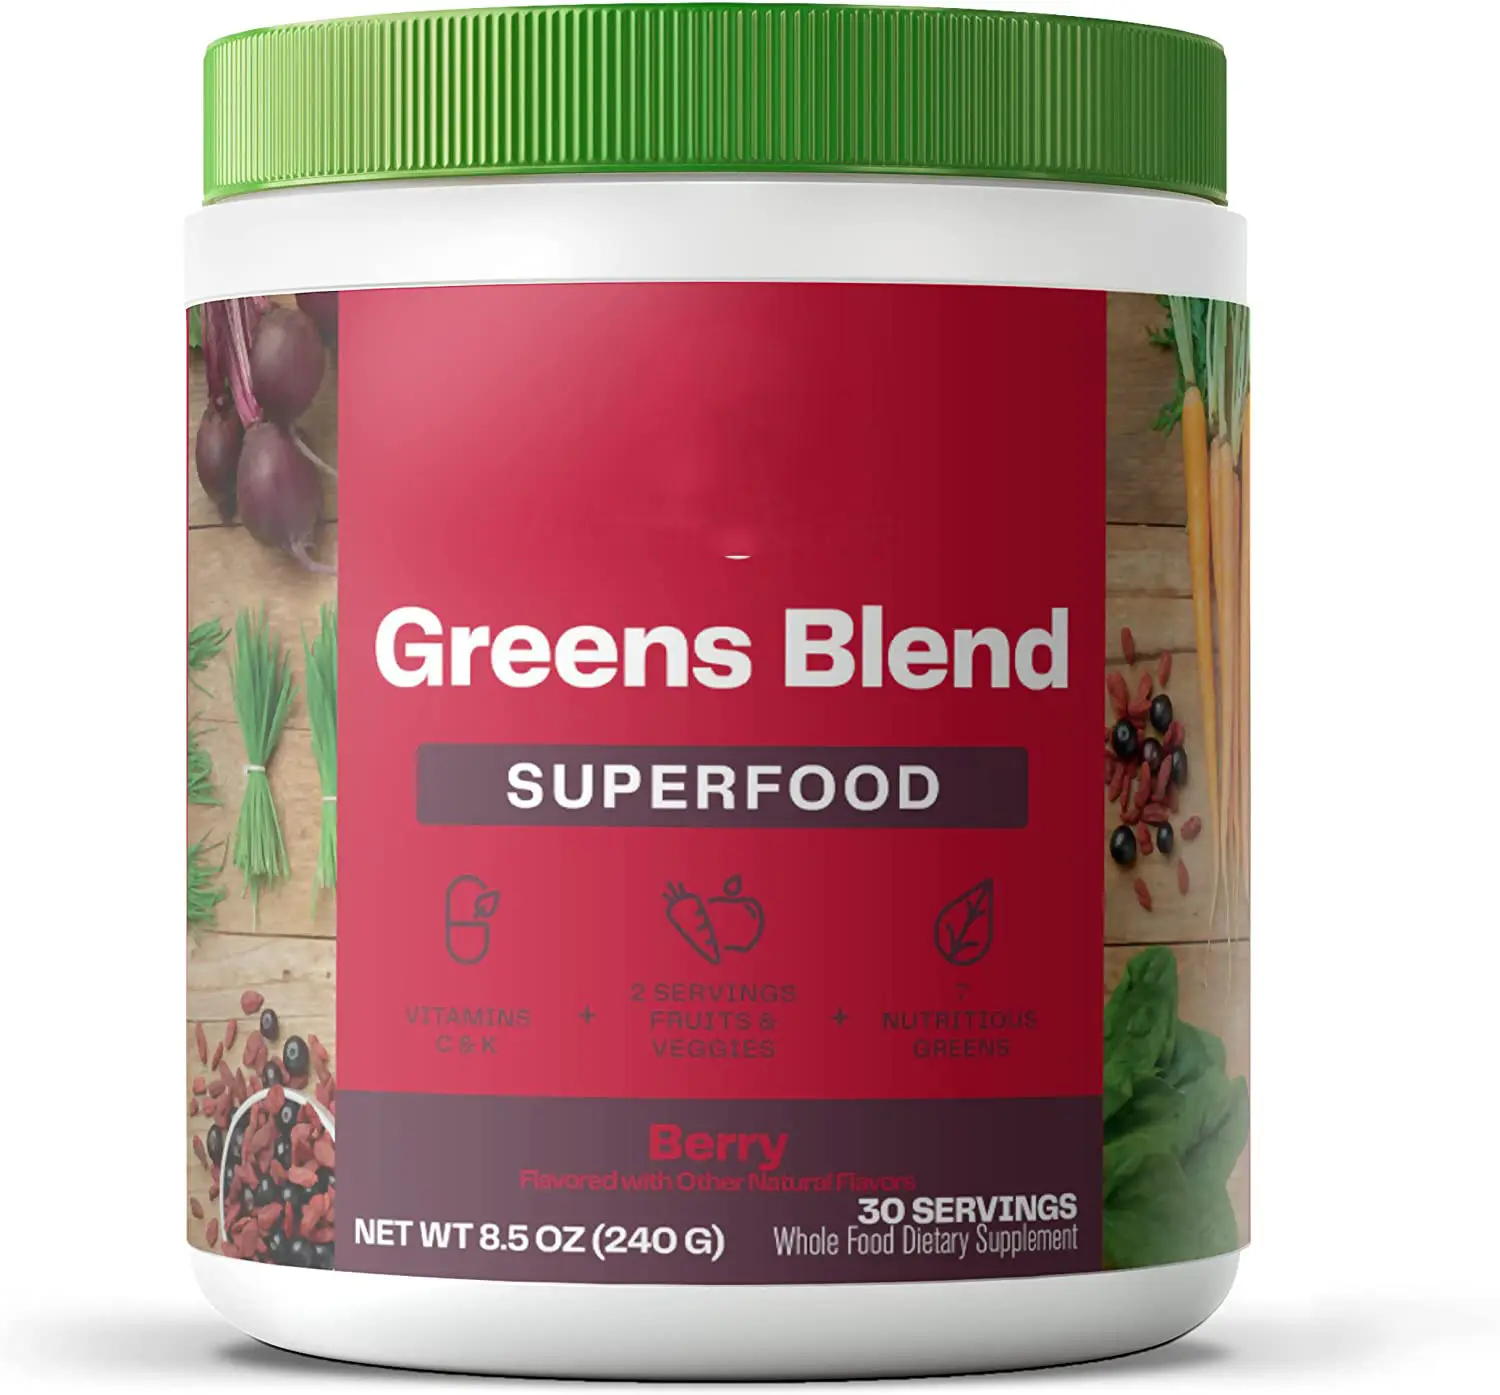 Oem Super Health Quality Vegetable And Fruit Delivery Health Care Natural Food Coloring Supplement Green Super Vegan Powder